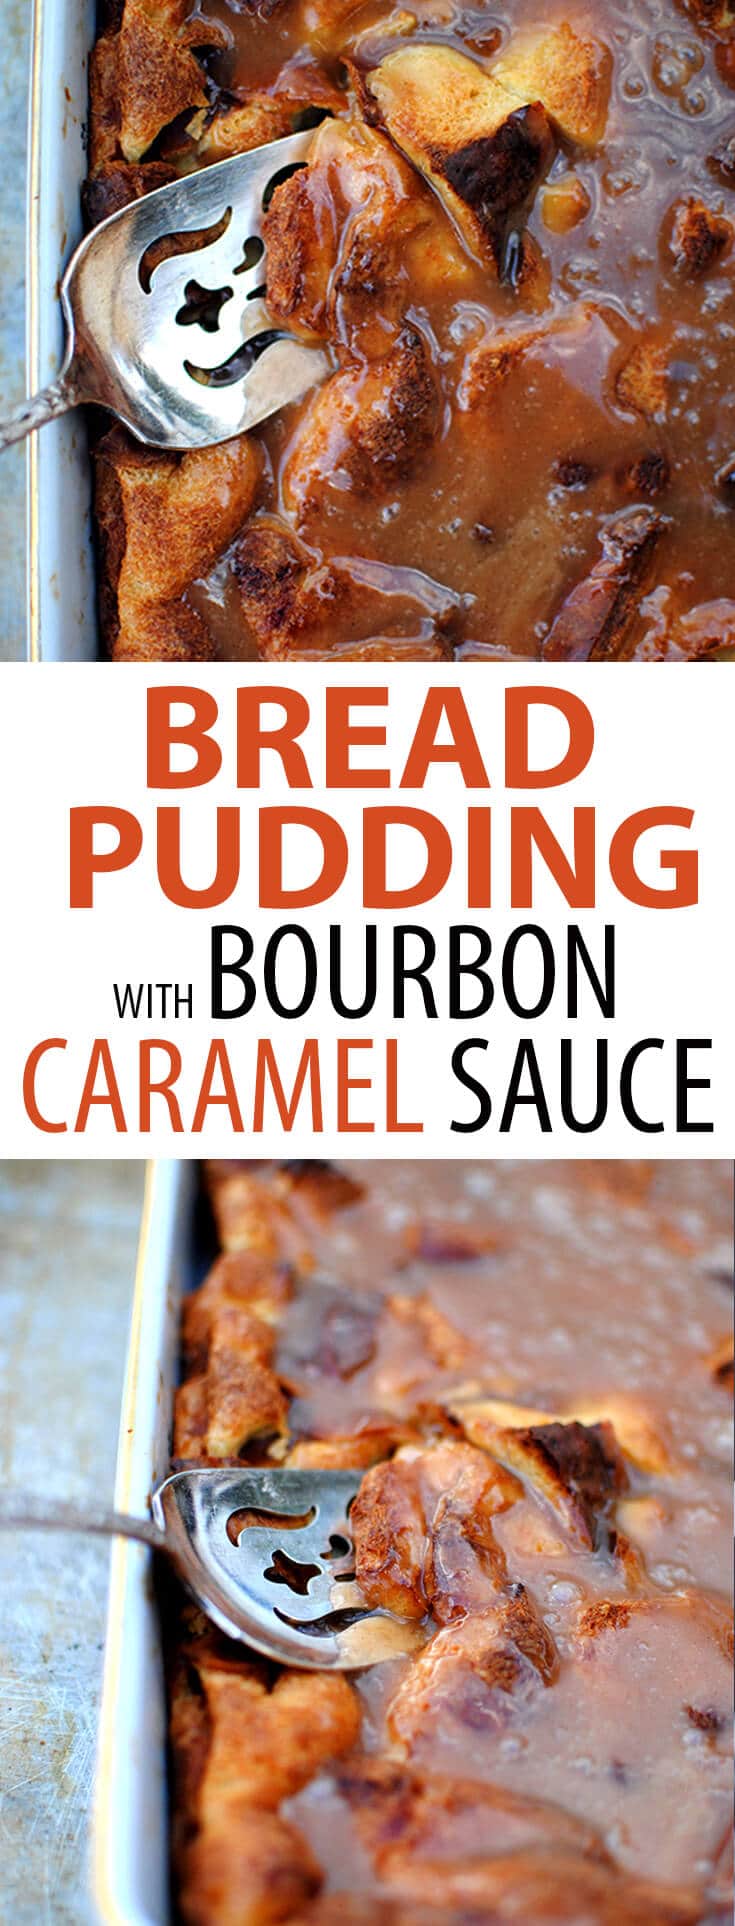 Bread Pudding with Bourbon Caramel Sauce